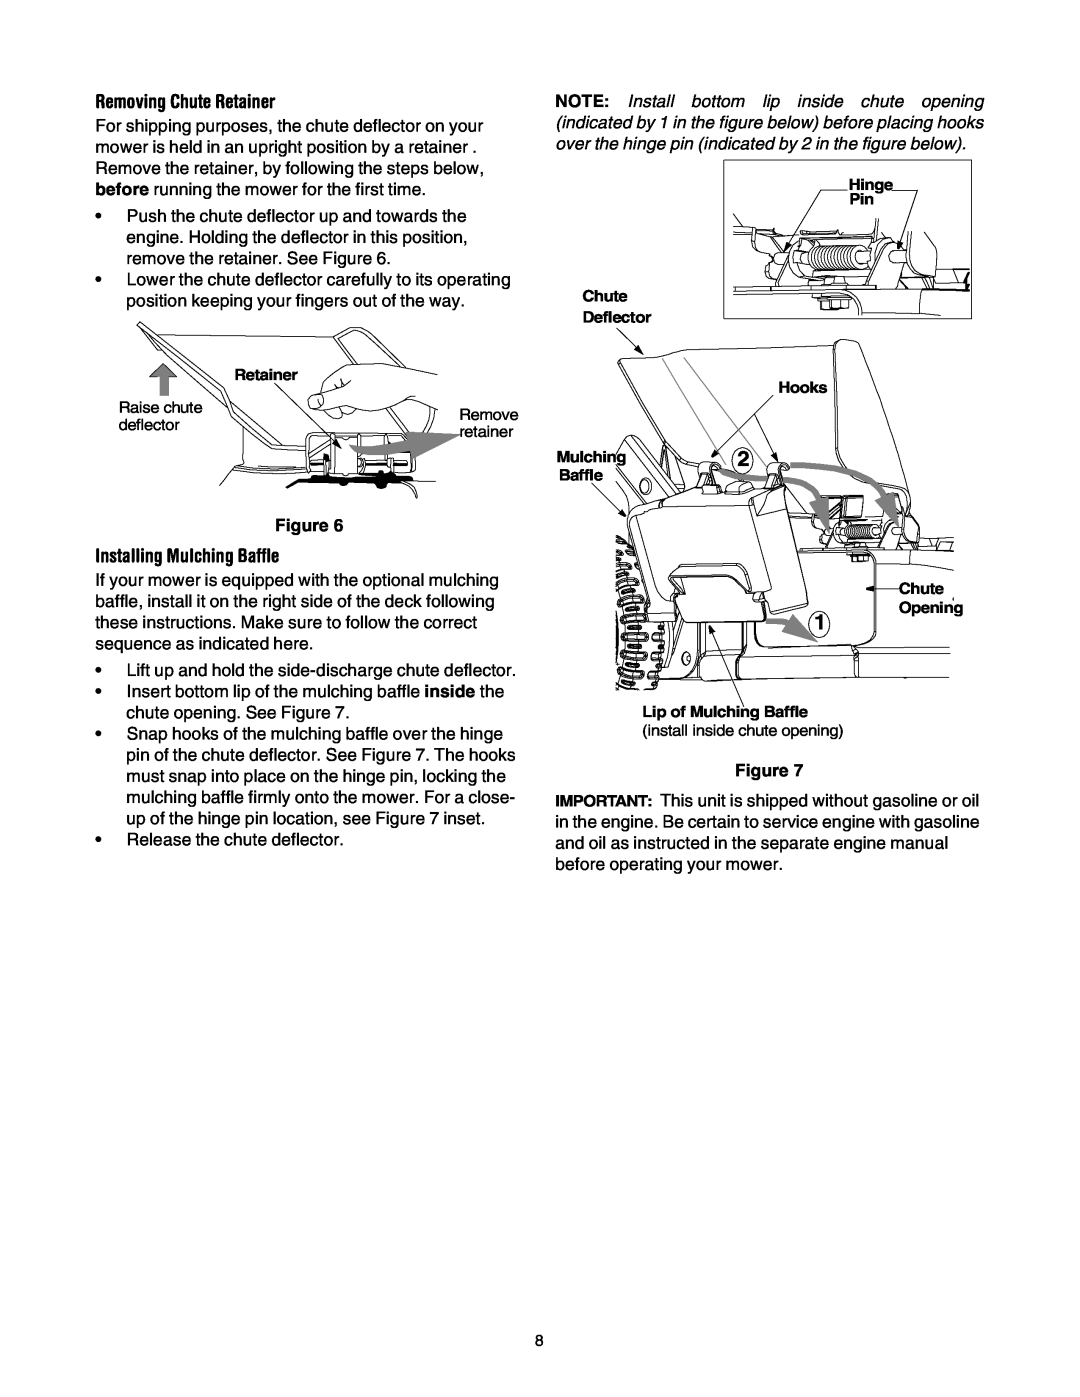 Bolens 84 manual Removing Chute Retainer, Installing Mulching Baffle 